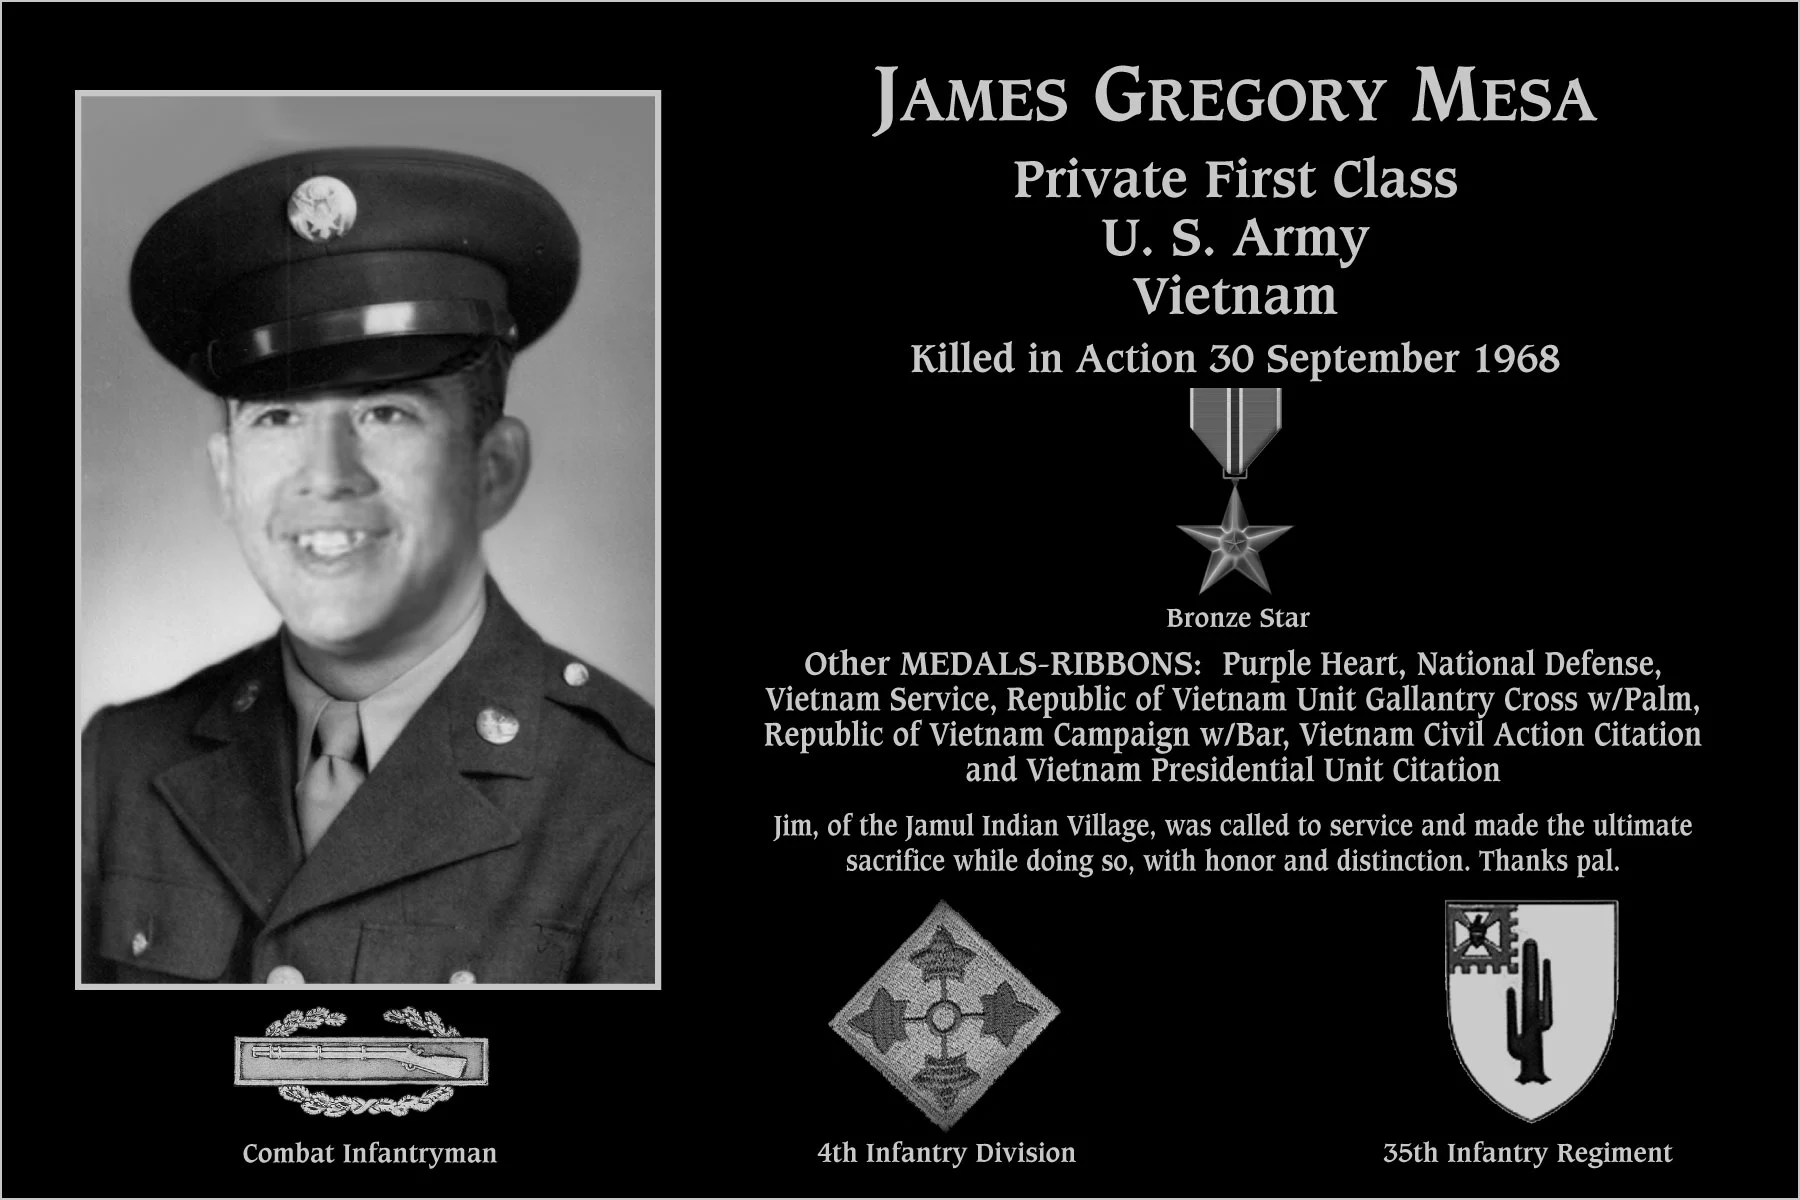 James Gregory Mesa